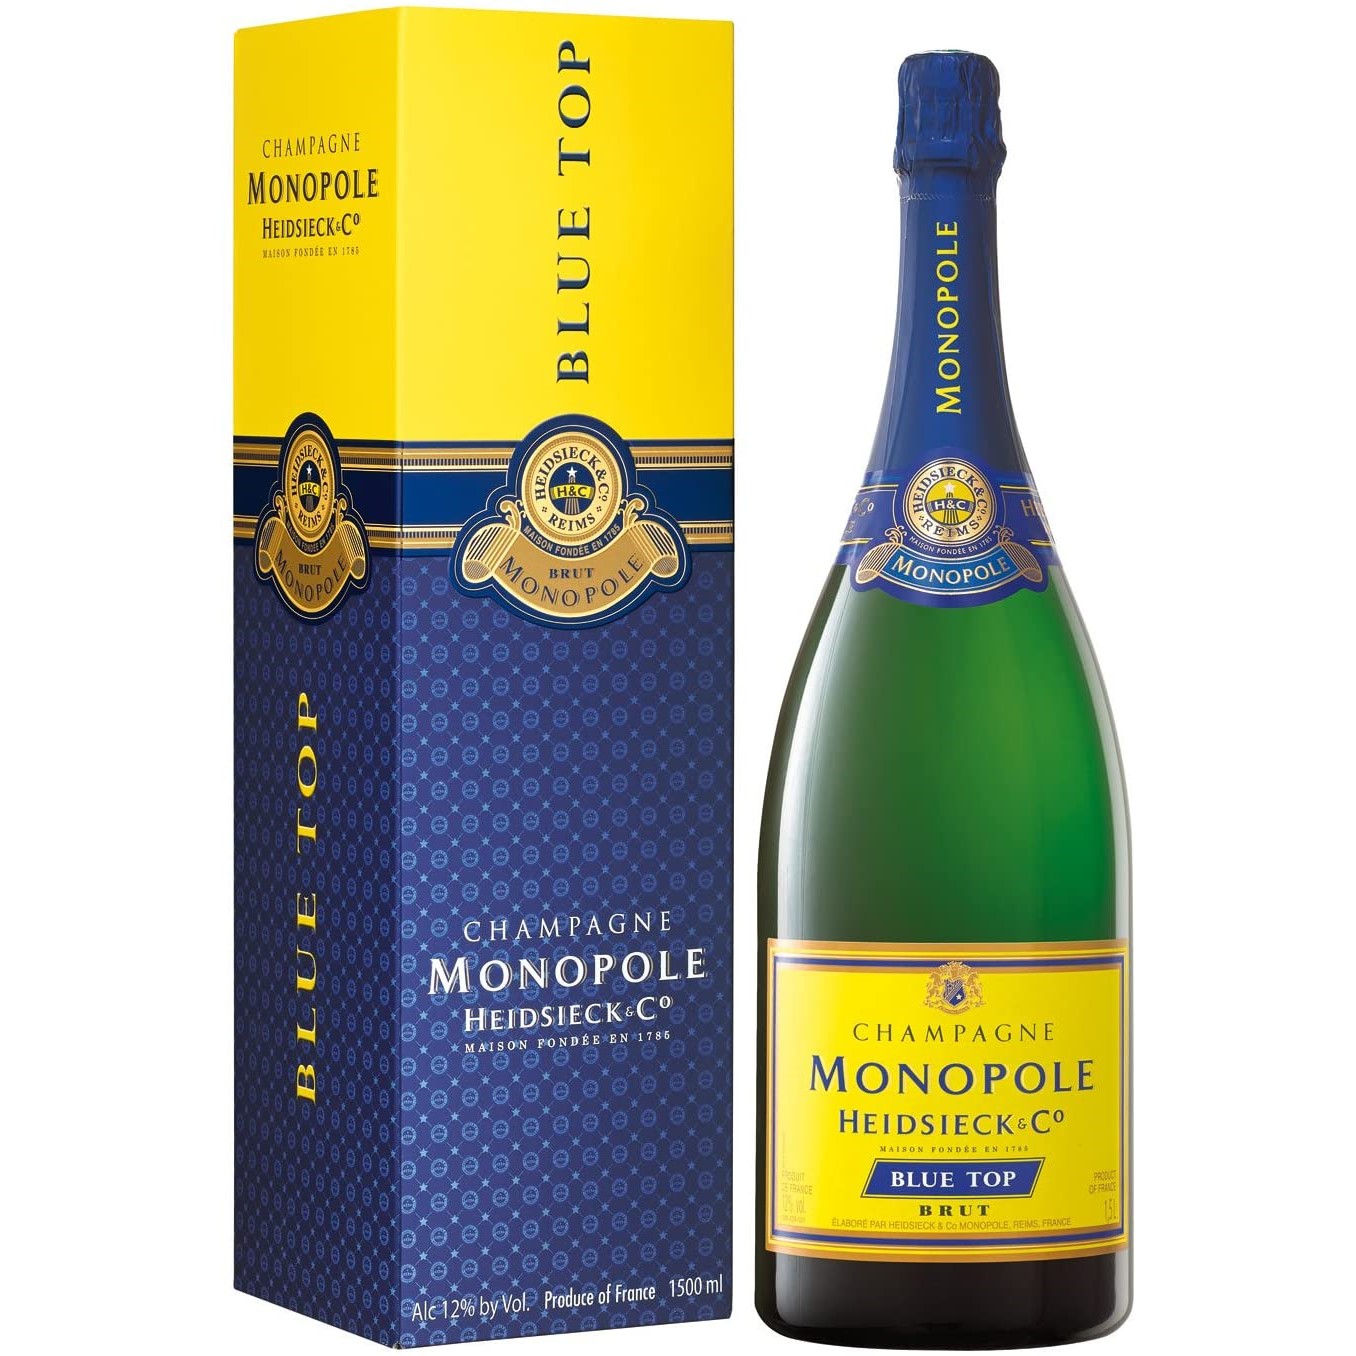 Champagne Heidsieck & Co Monopole - Blue Top